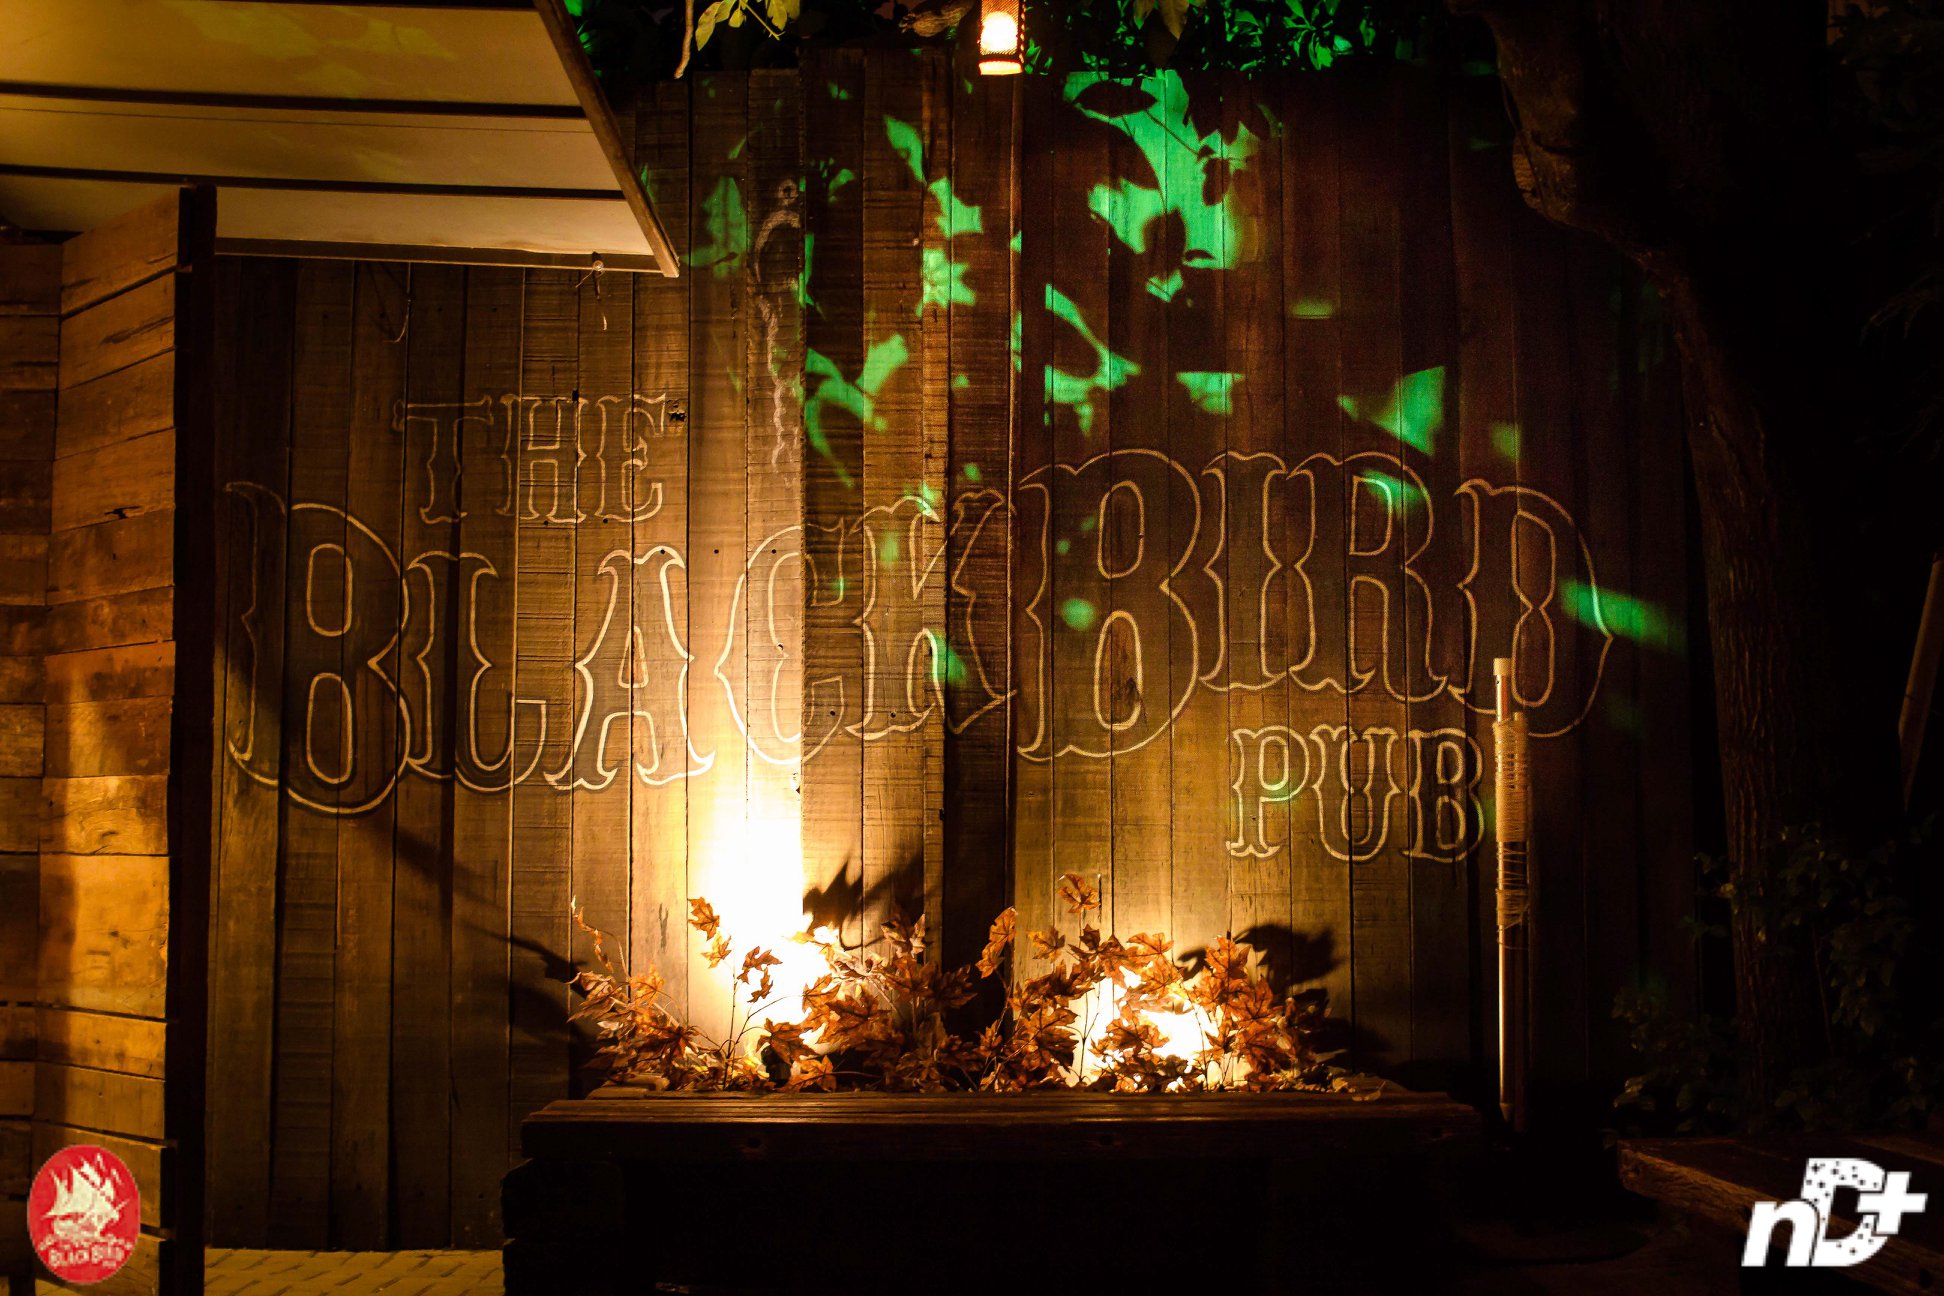 The BlackBird Pub